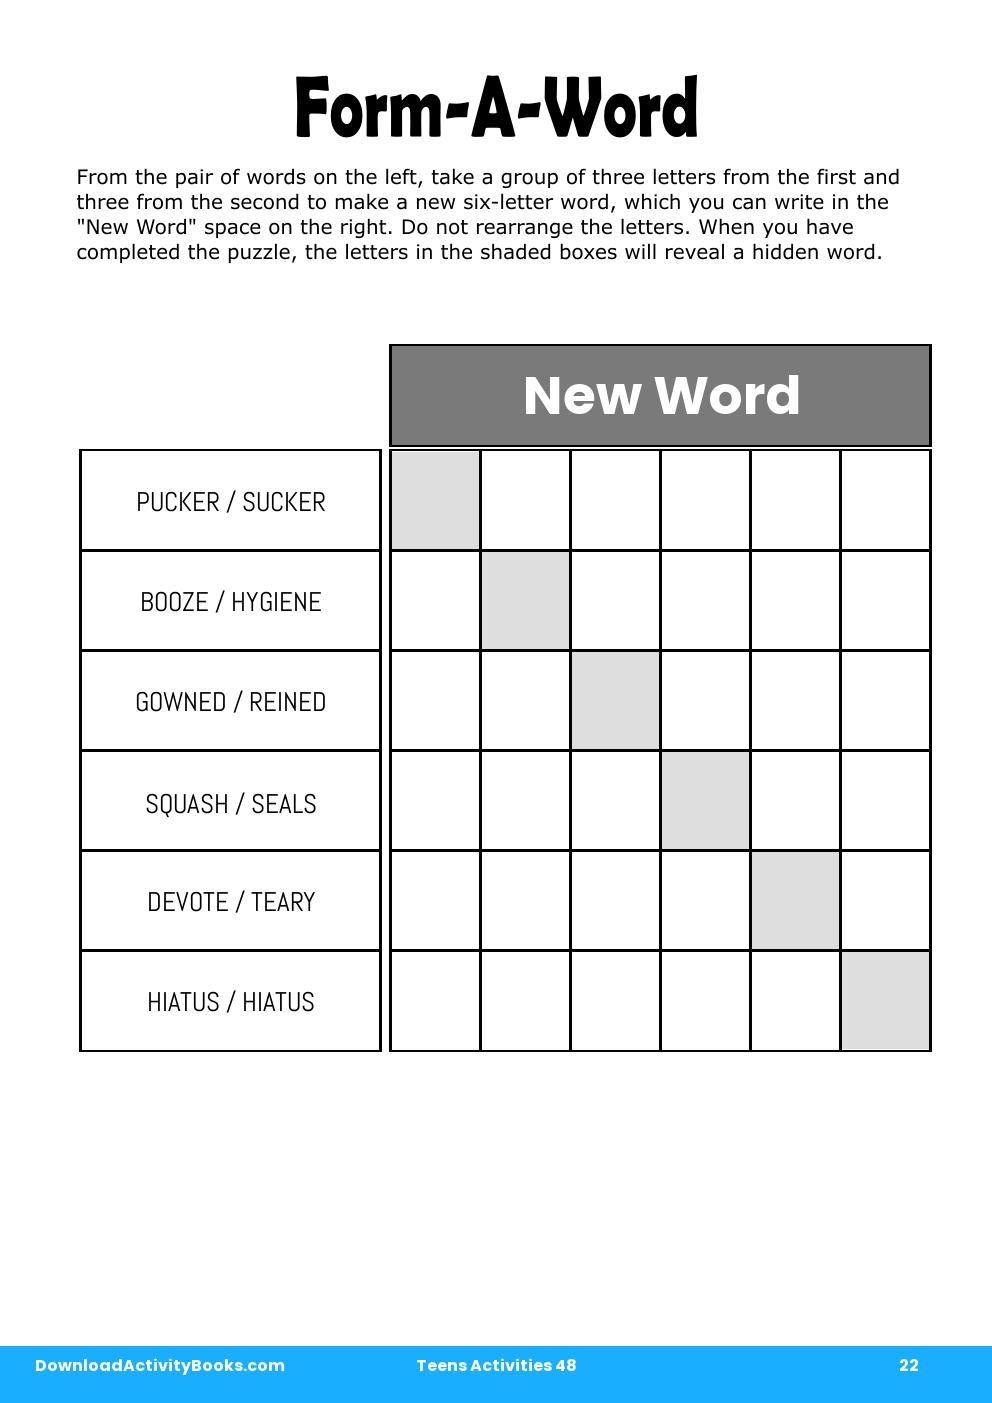 Form-A-Word in Teens Activities 48